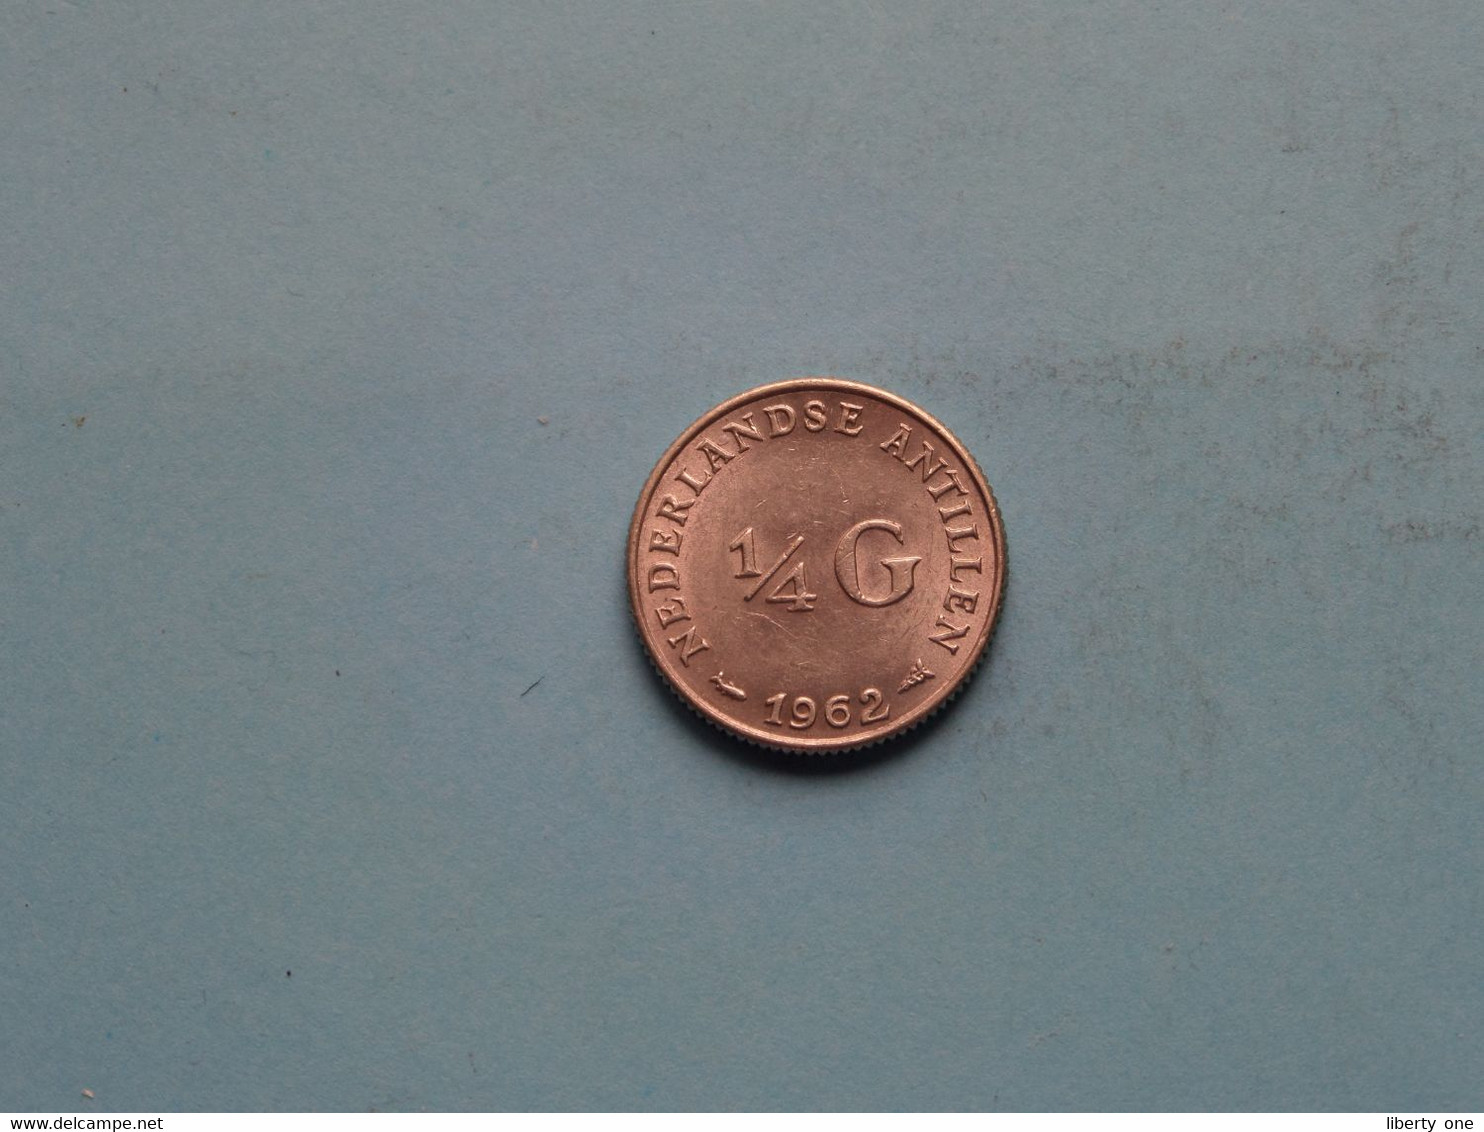 1962 - 1/4 Gulden ( For Grade, Please See Photo ) F ! - Netherlands Antilles